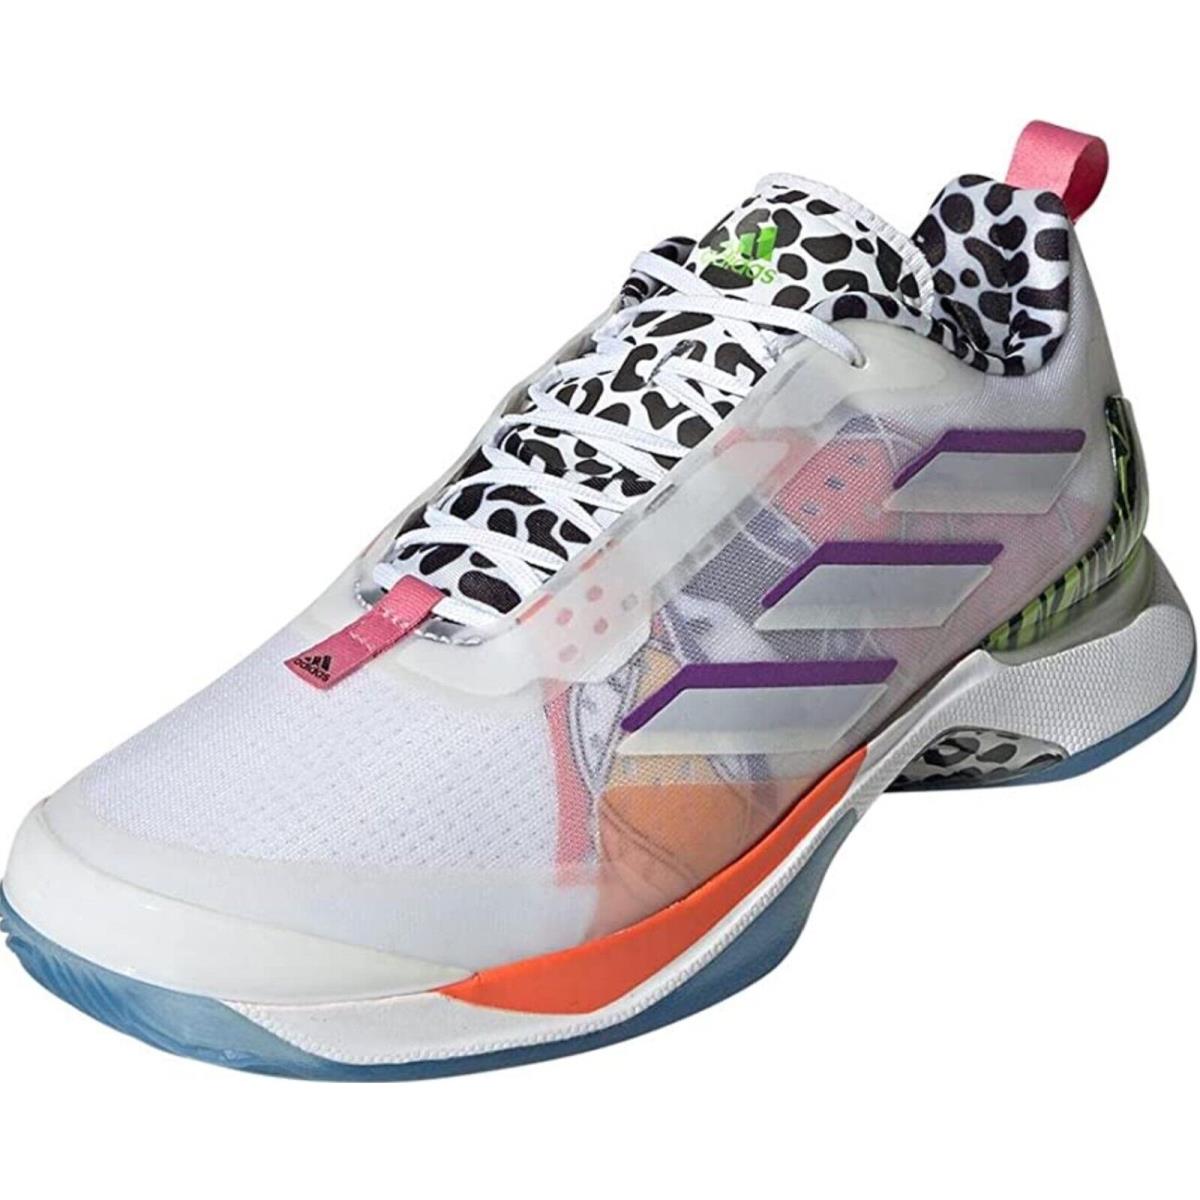 Adidas Womens Avacourt White Purple Tennis Pickleball Shoes Sneakers Sz 8 GZ3750